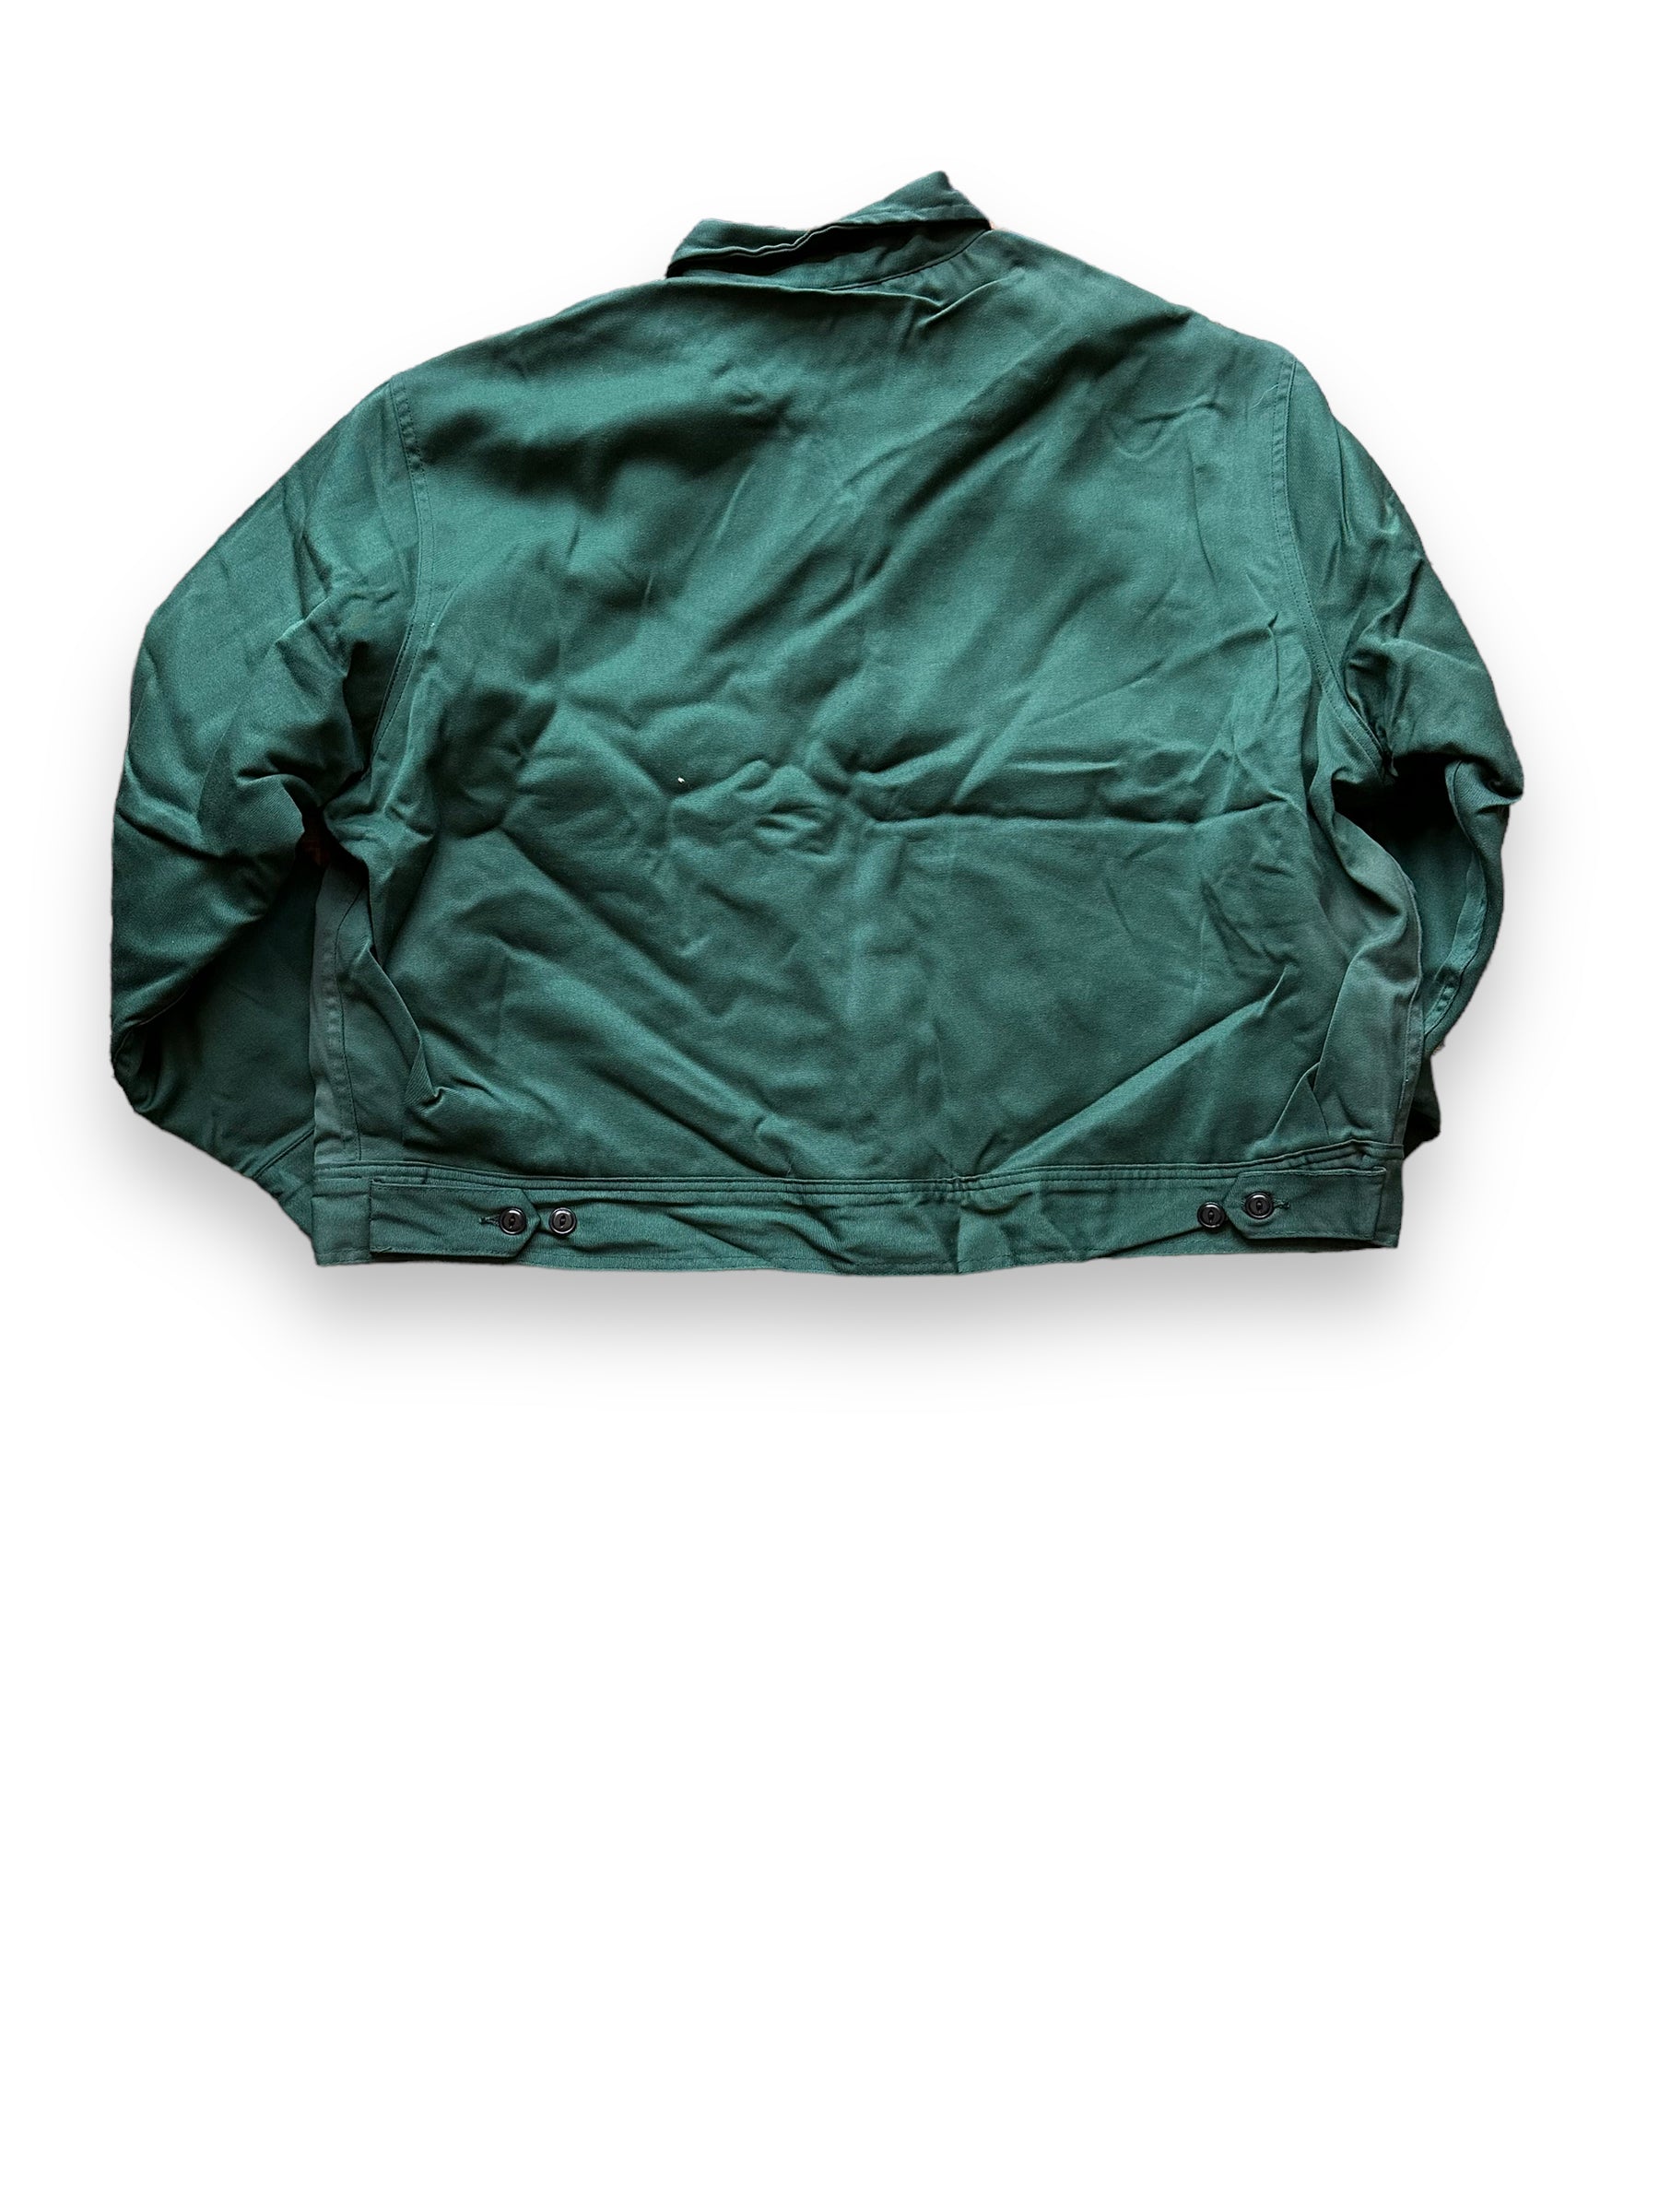 Rear View of Vintage Green Troyset Blanket Lined Gas Station Jacket SZ 54 | Vintage Workwear Jacket Seattle | Seattle Vintage Clothing